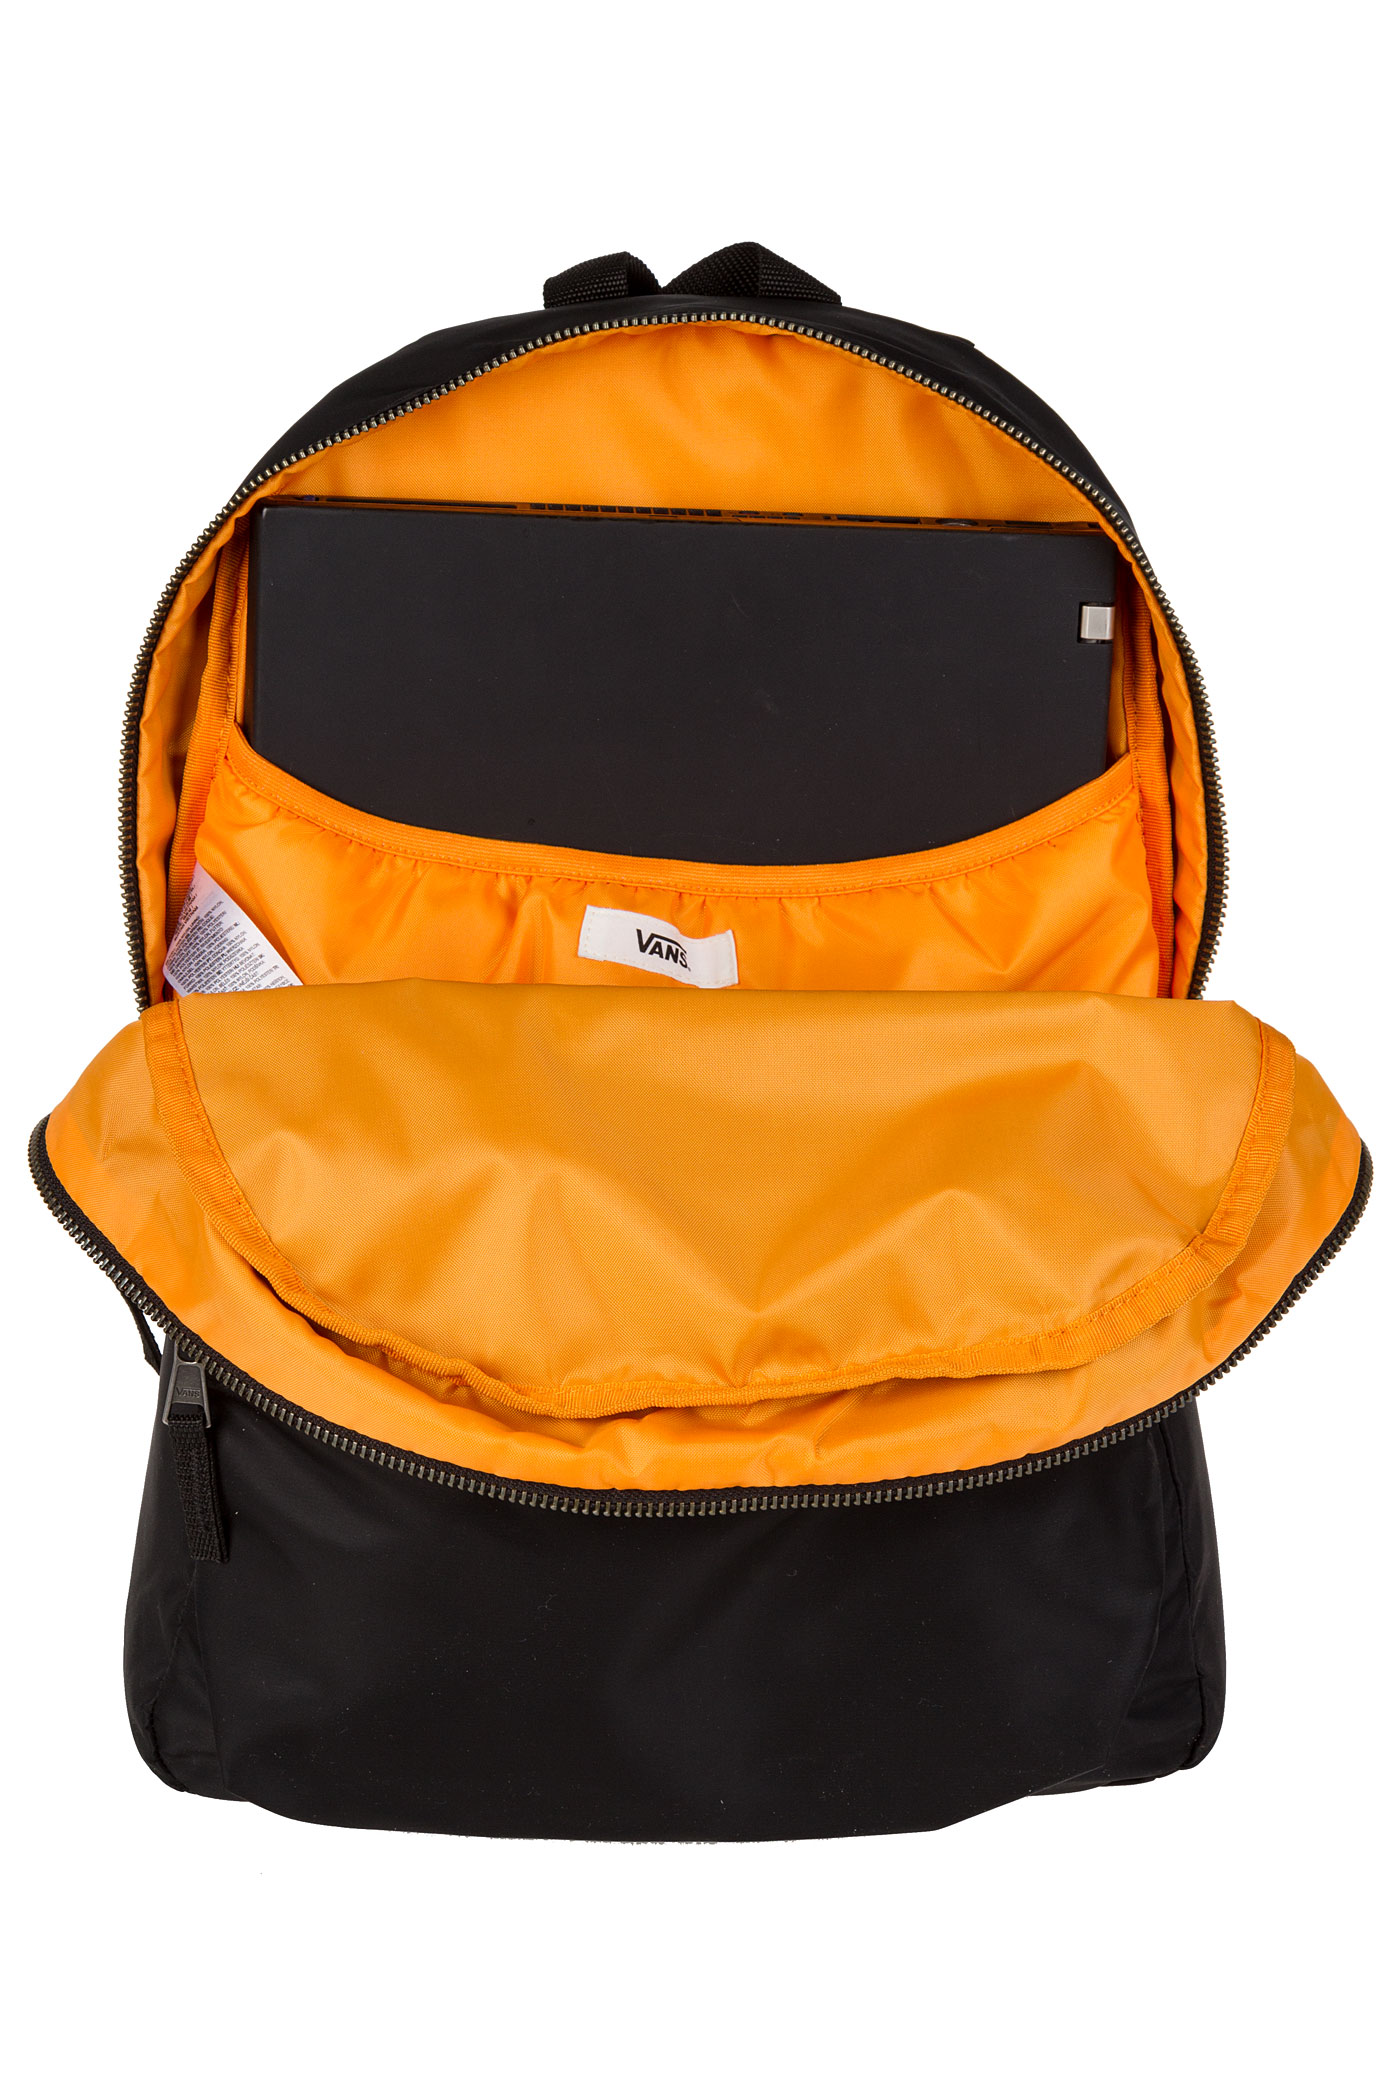 vans bookbag Orange